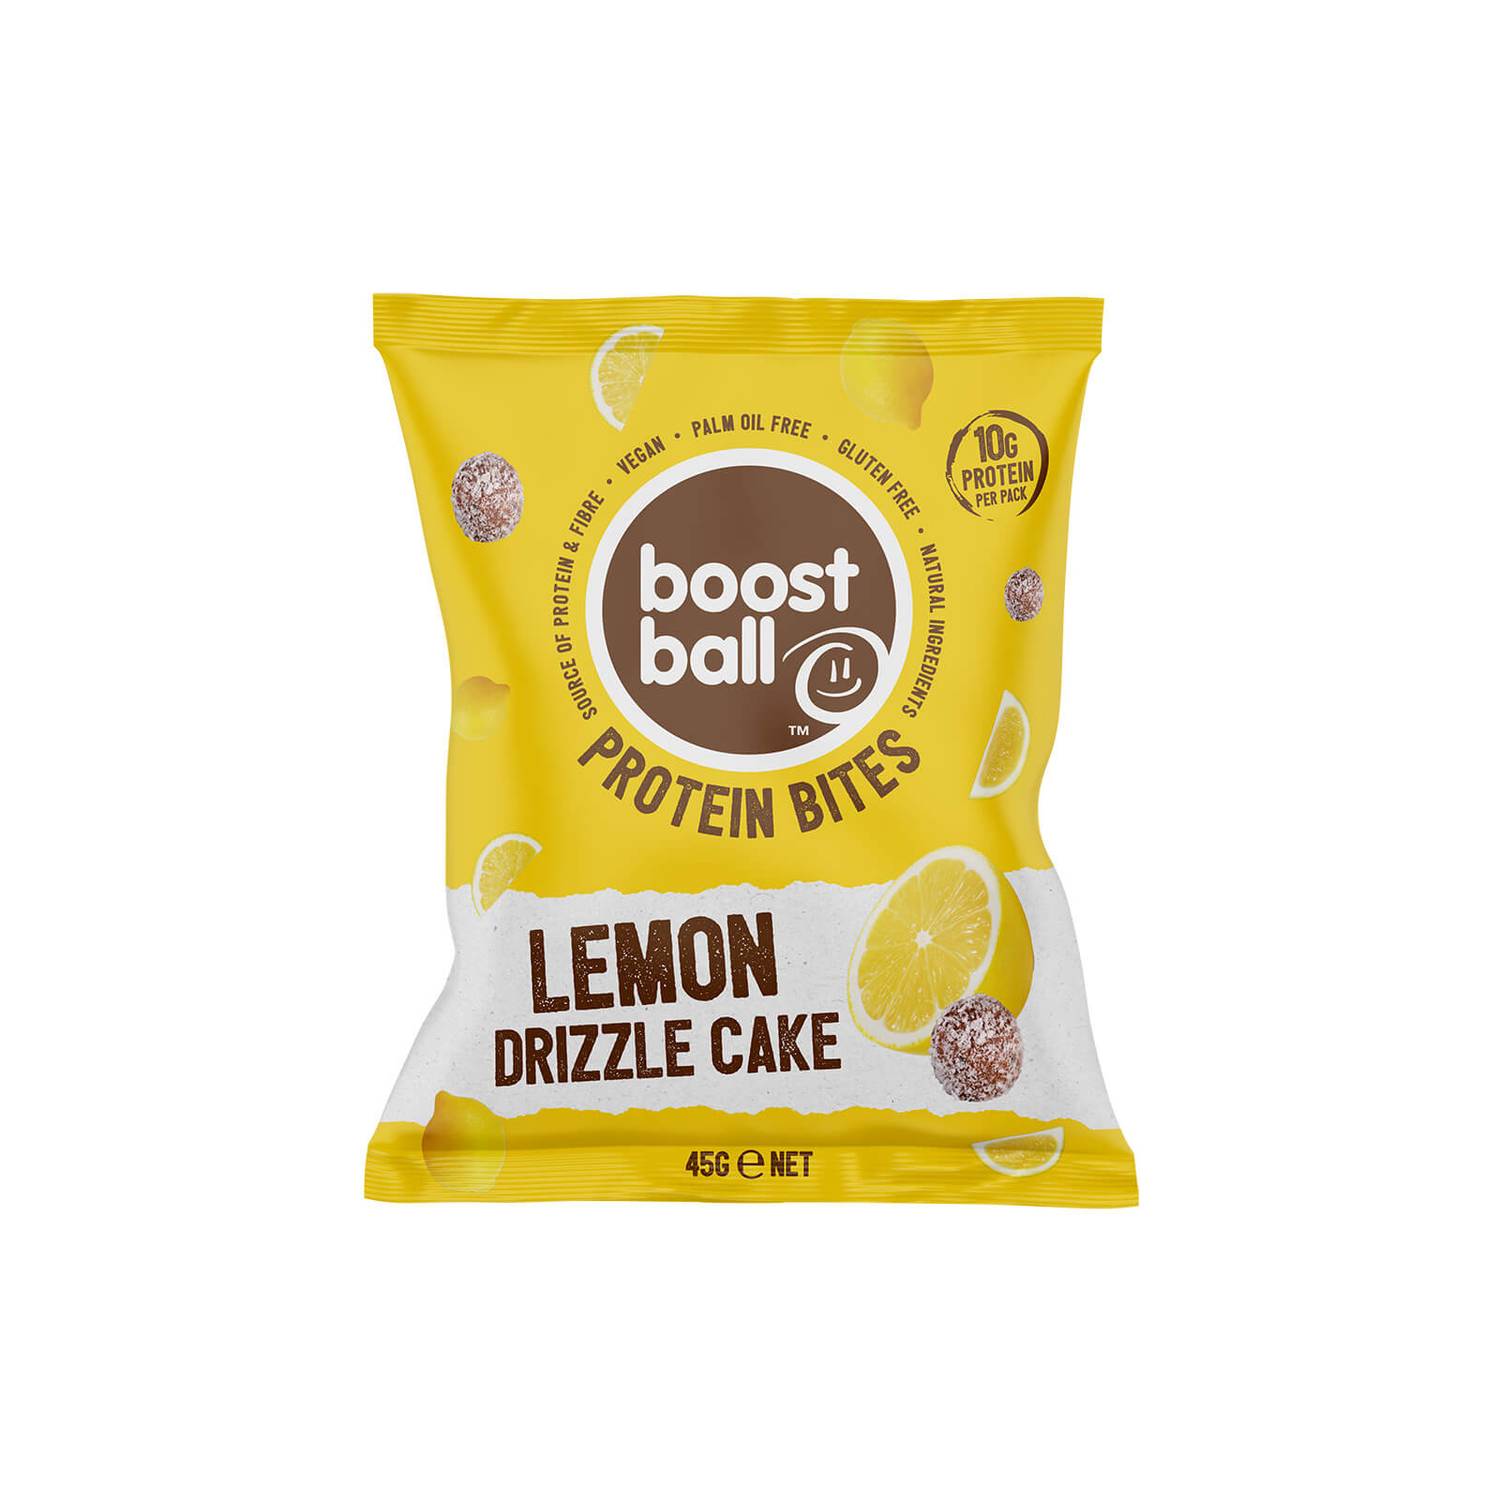 Boost Ball Protein Bites 10g Protein Lemon Drizzle Cake Bites Vegan 45g